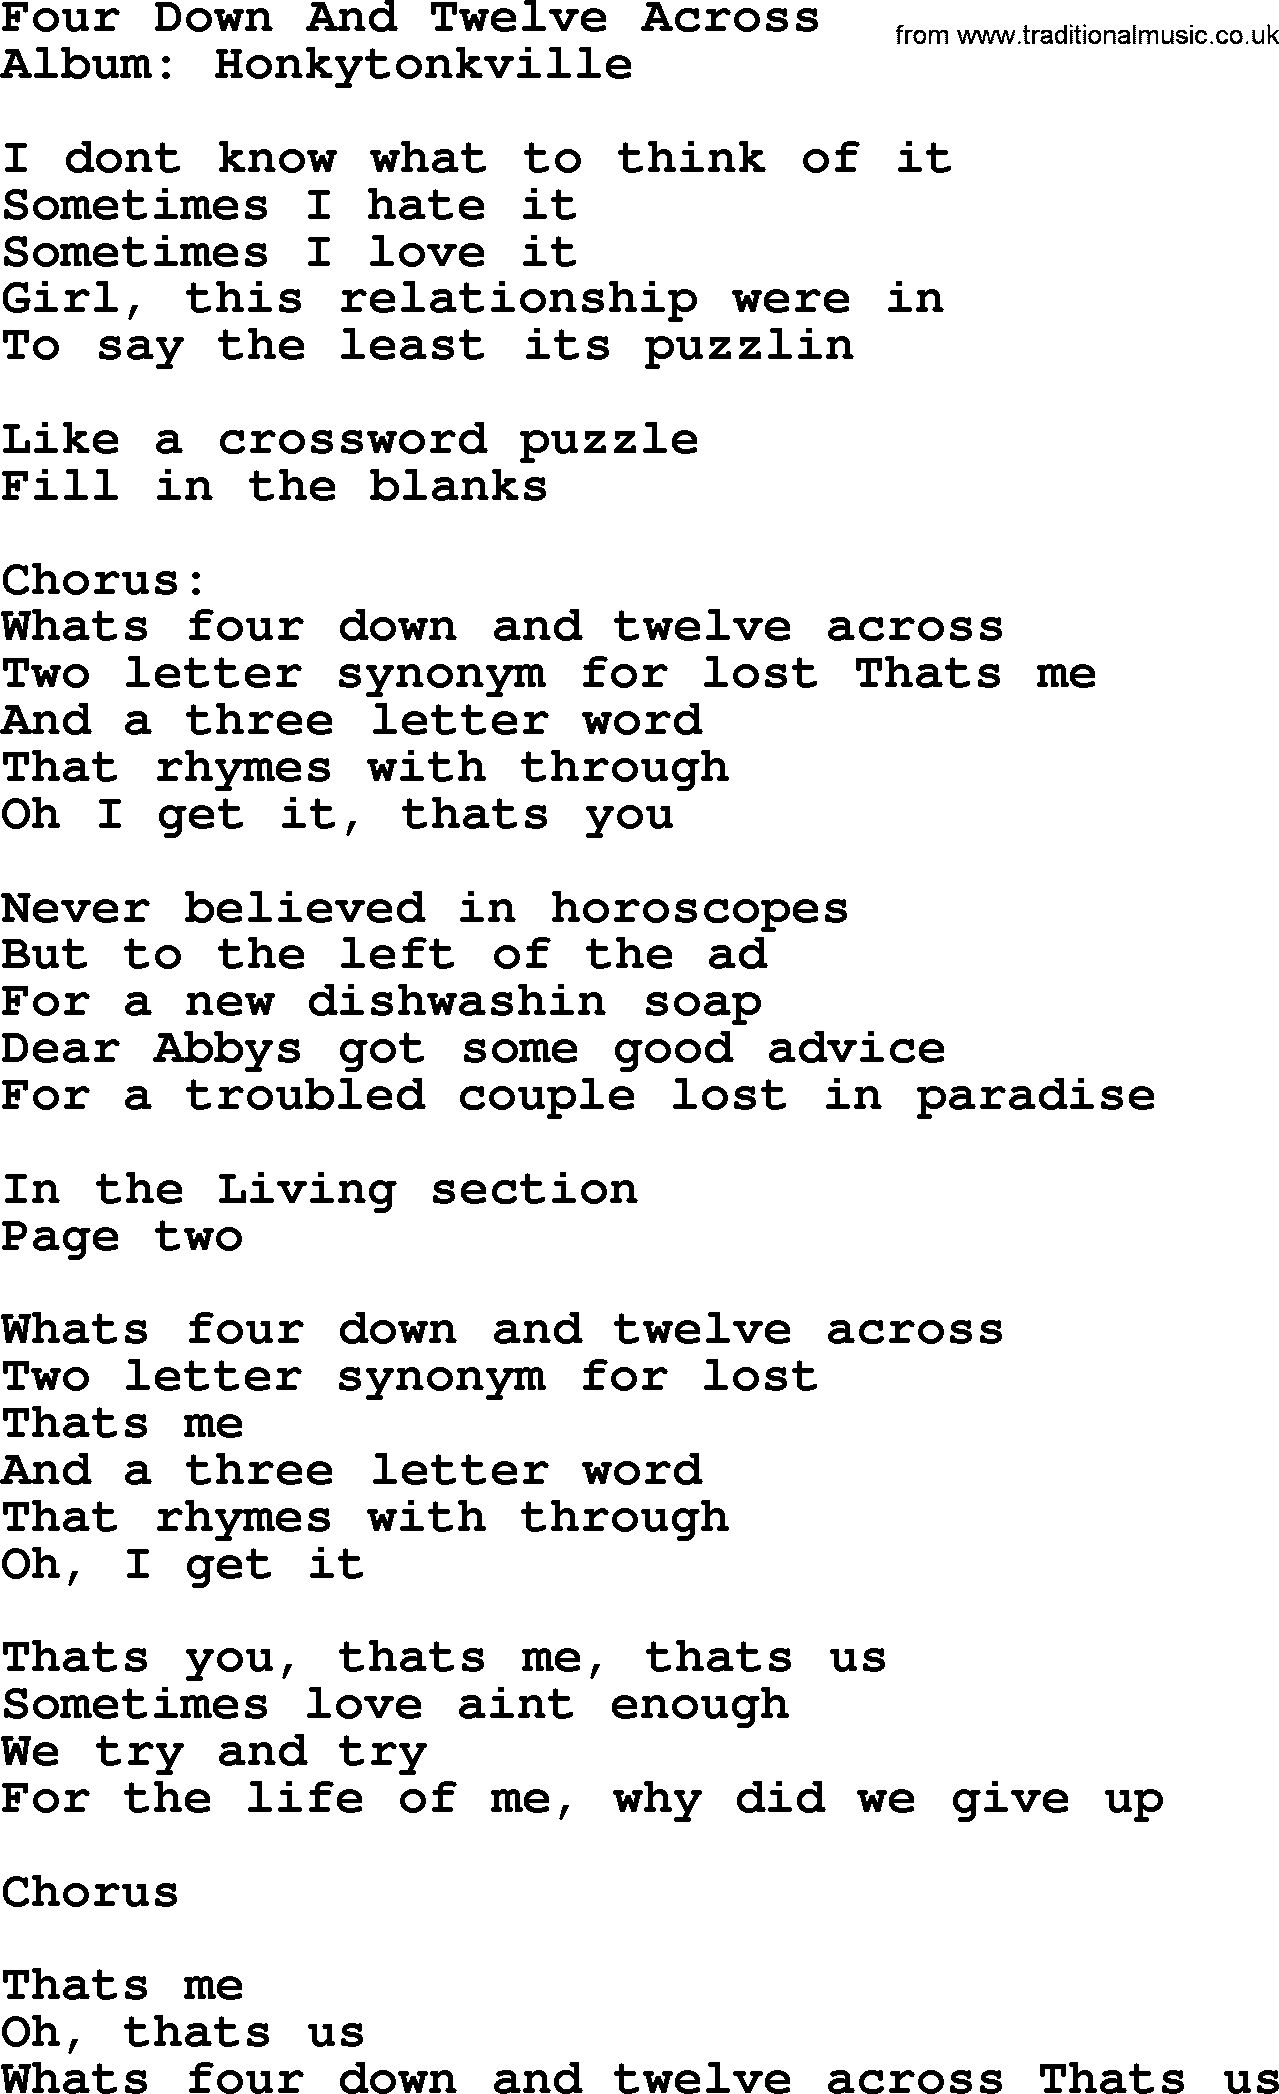 George Strait song: Four Down And Twelve Across, lyrics